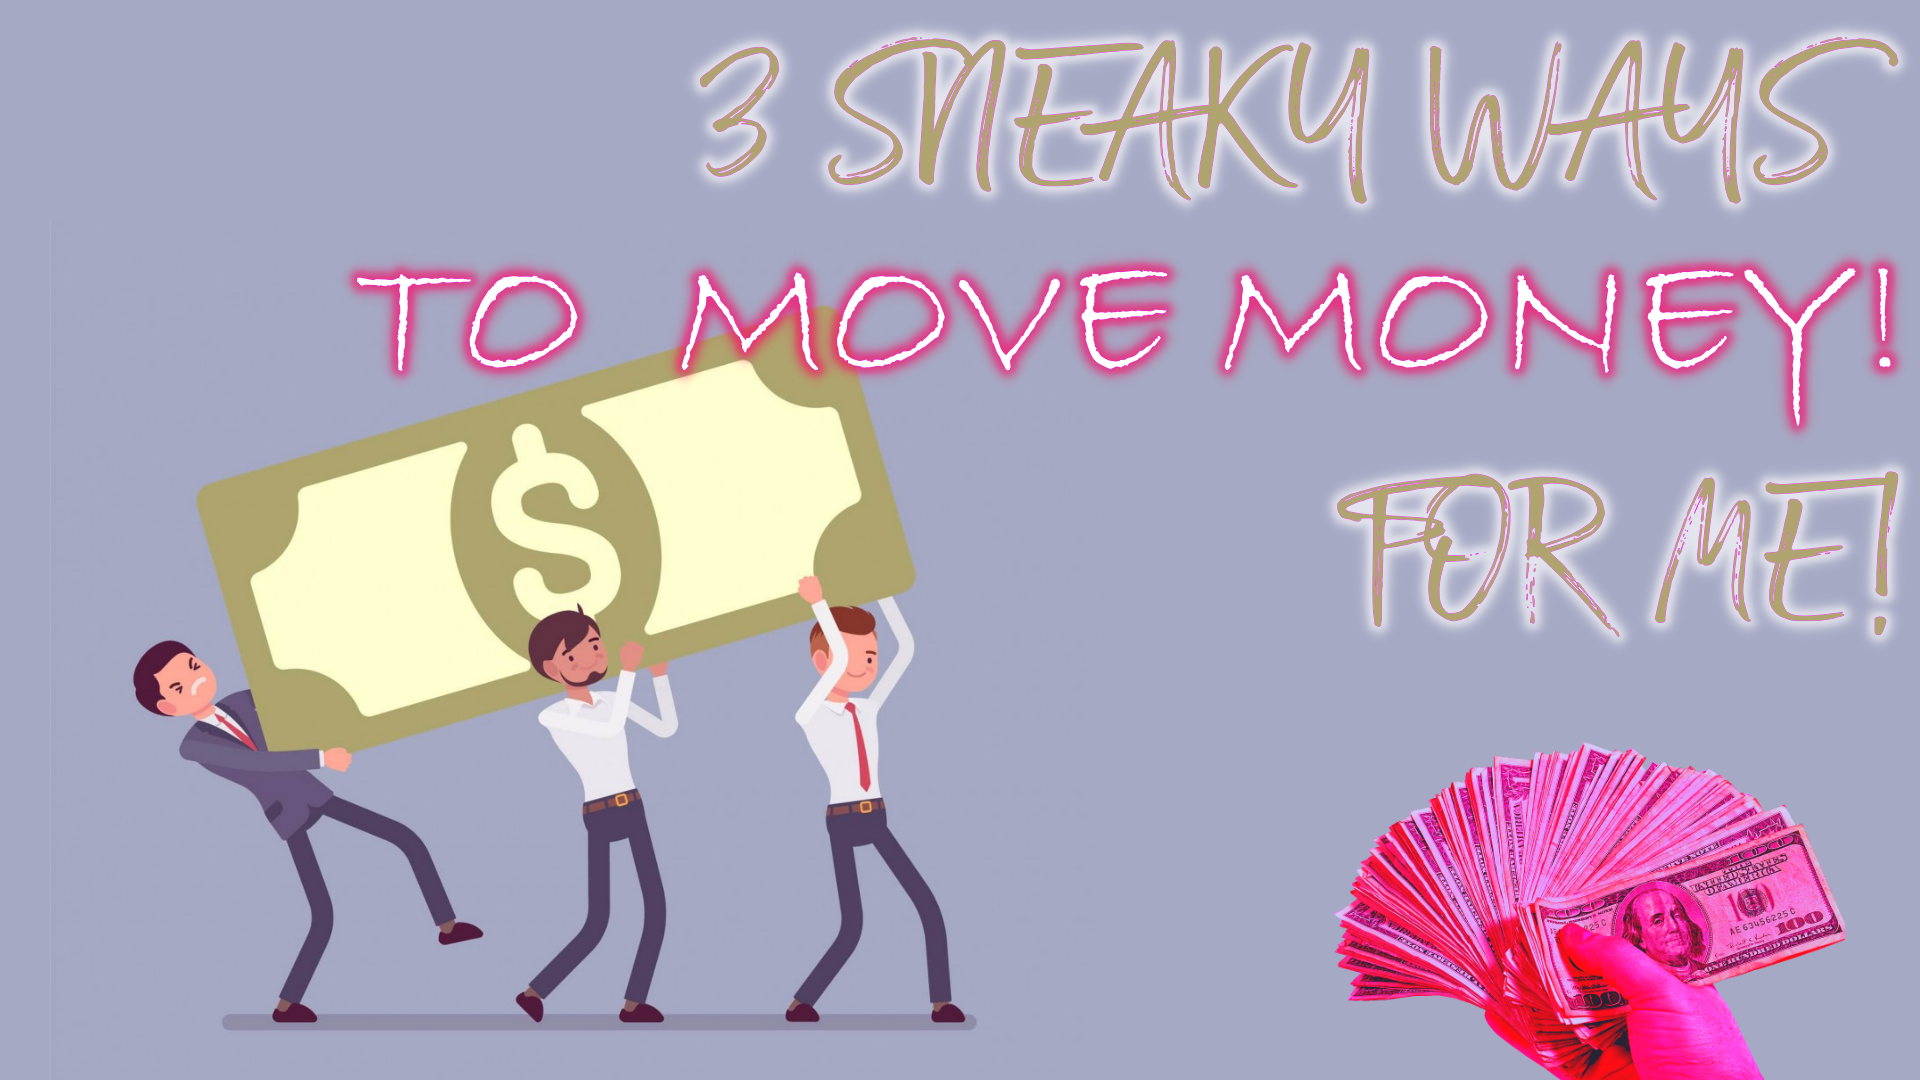 3 SNEAKY WAYS TO MOVE MONEY